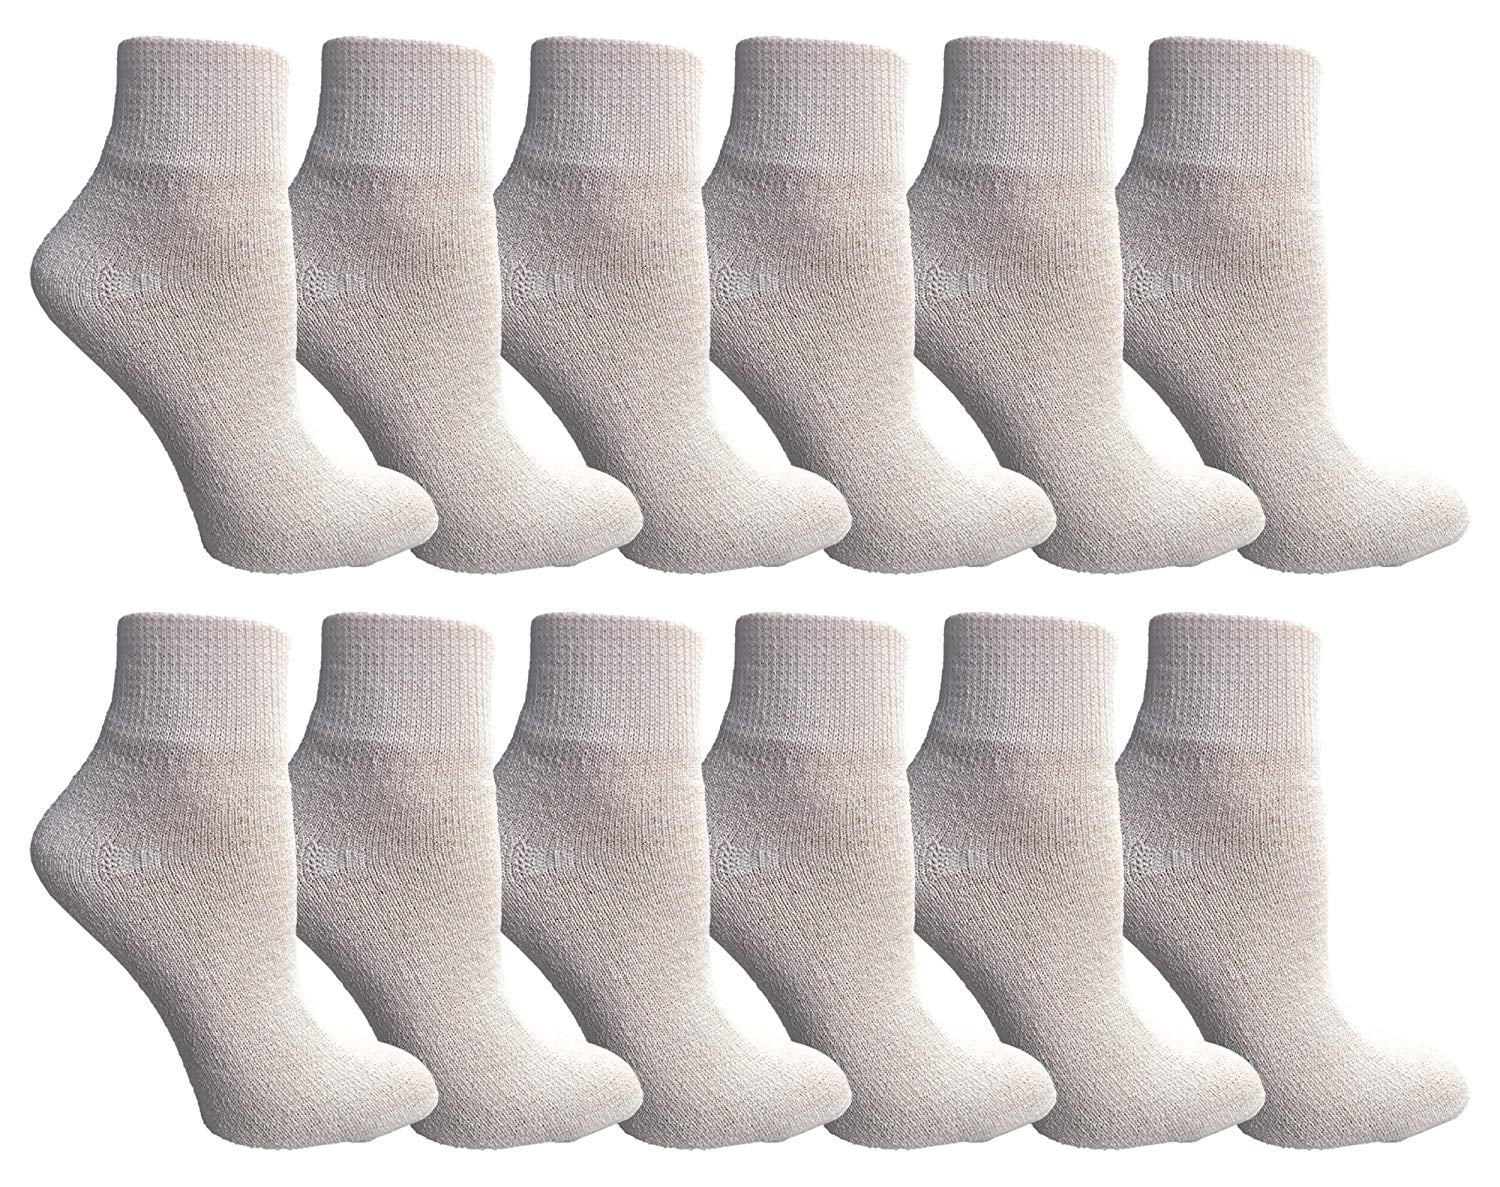 Десять носок. White Socks texture.